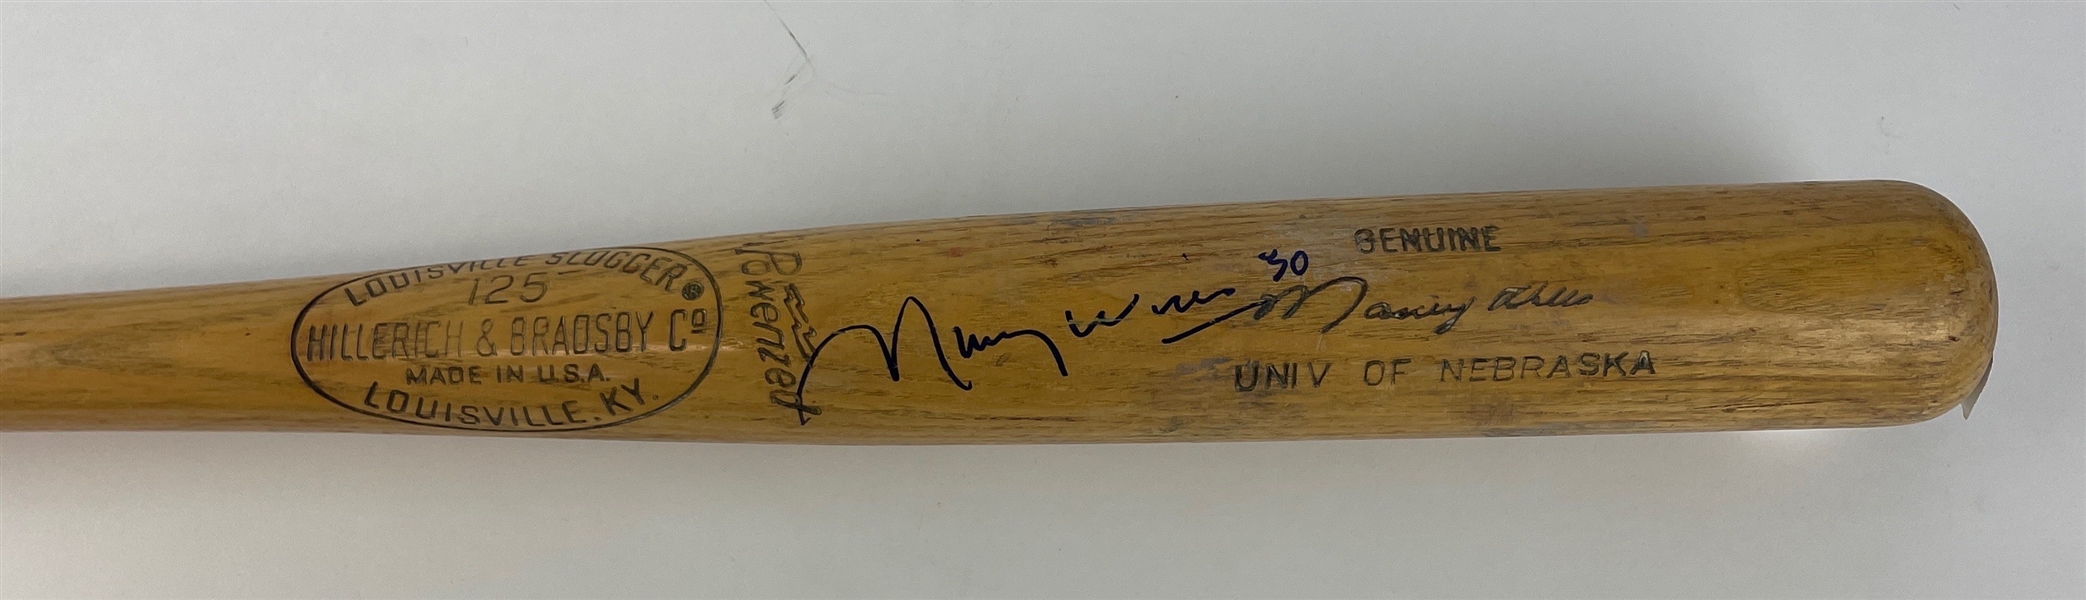 Maury Wills Signed Louisville Slugger Baseball Bat (JSA COA)